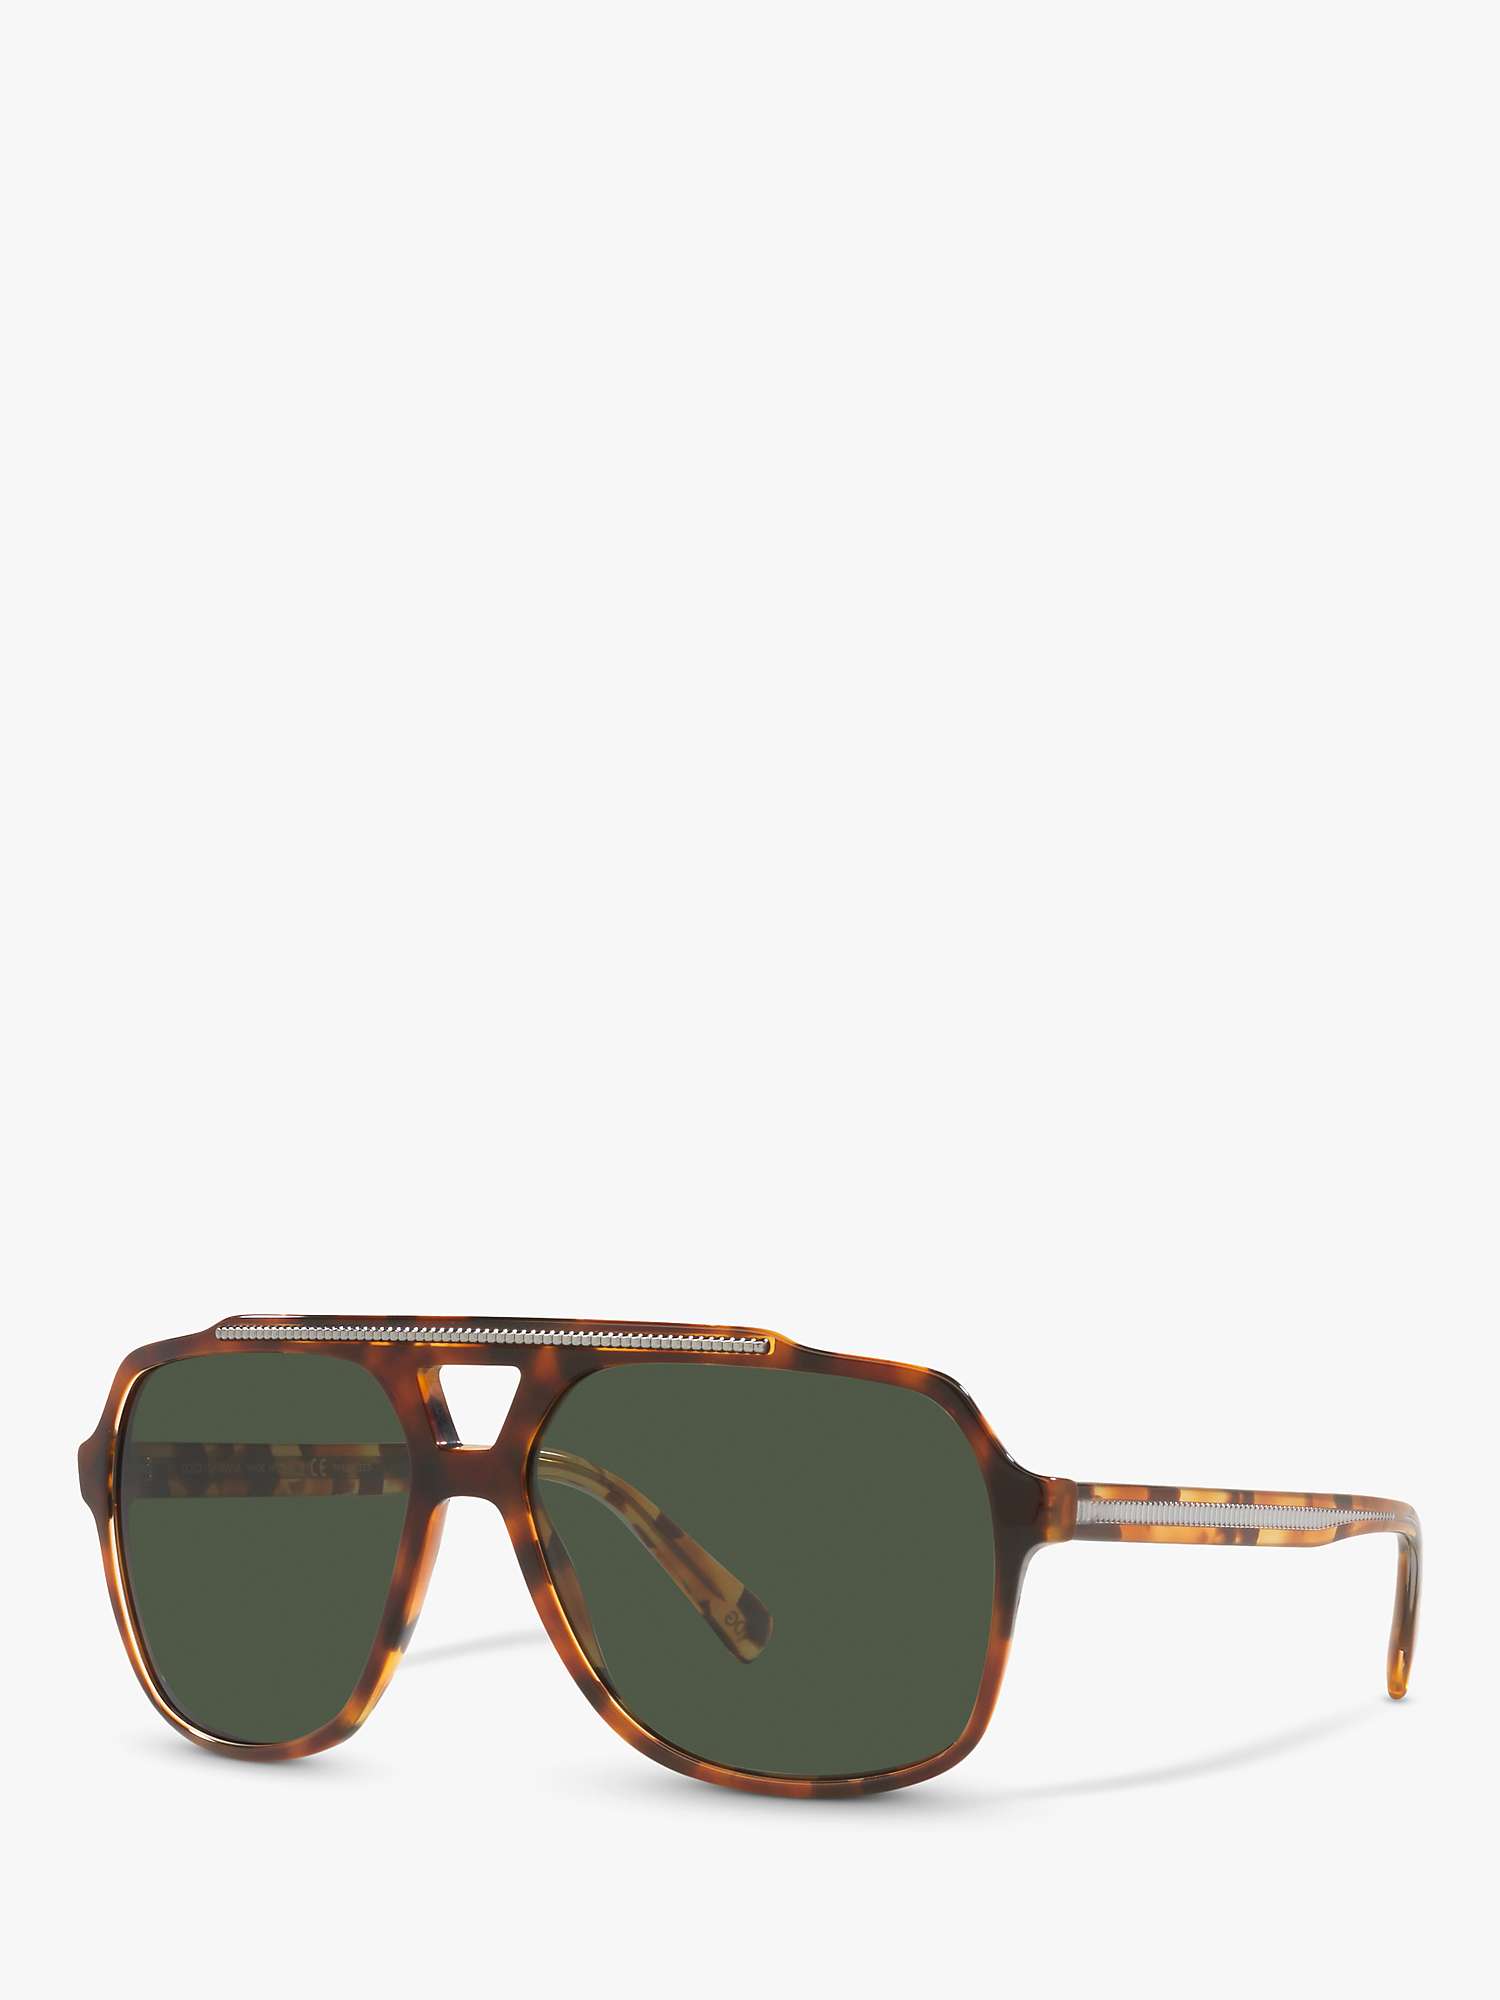 Buy Dolce & Gabbana DG4388 Men's Polarised Aviator Sunglasses, Havana/Green Online at johnlewis.com